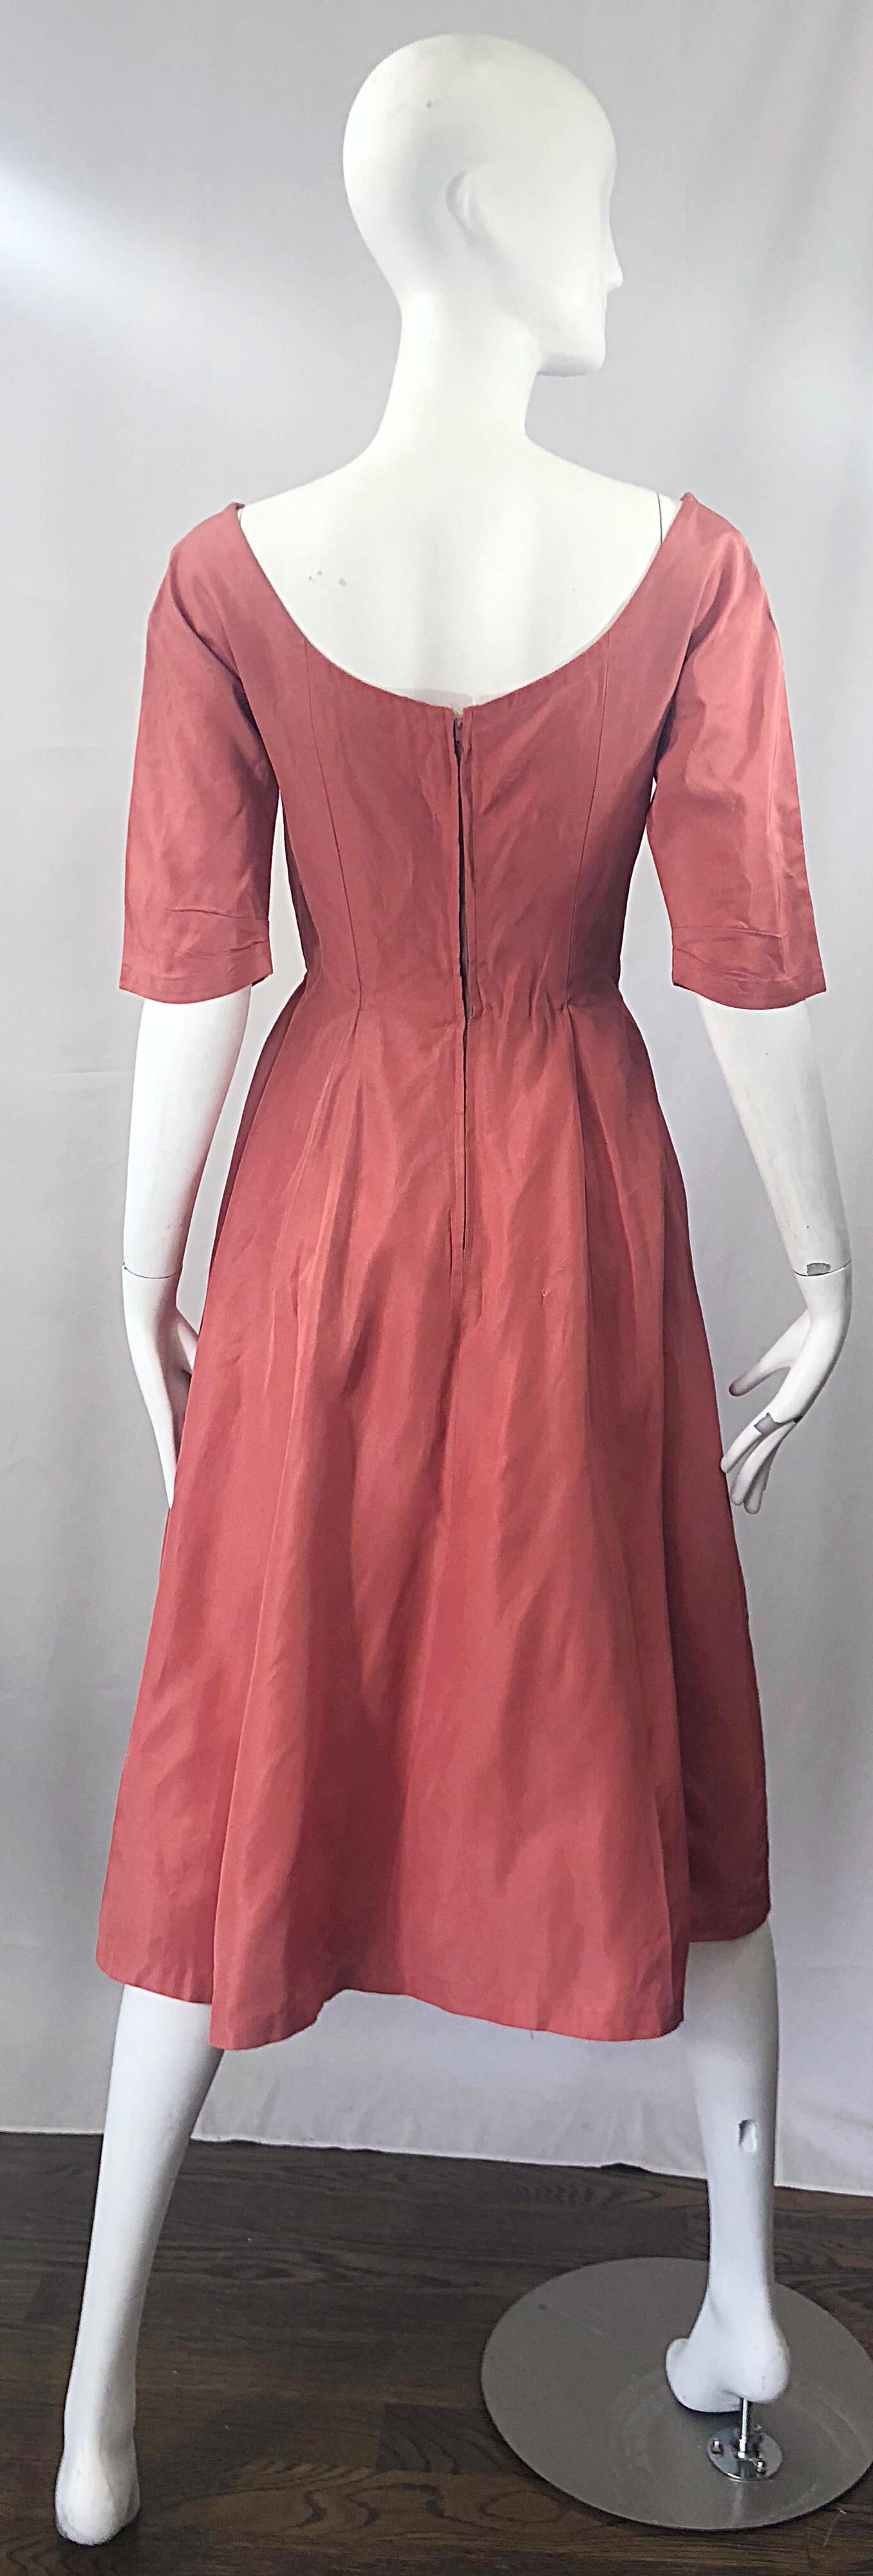 1950s taffeta dress